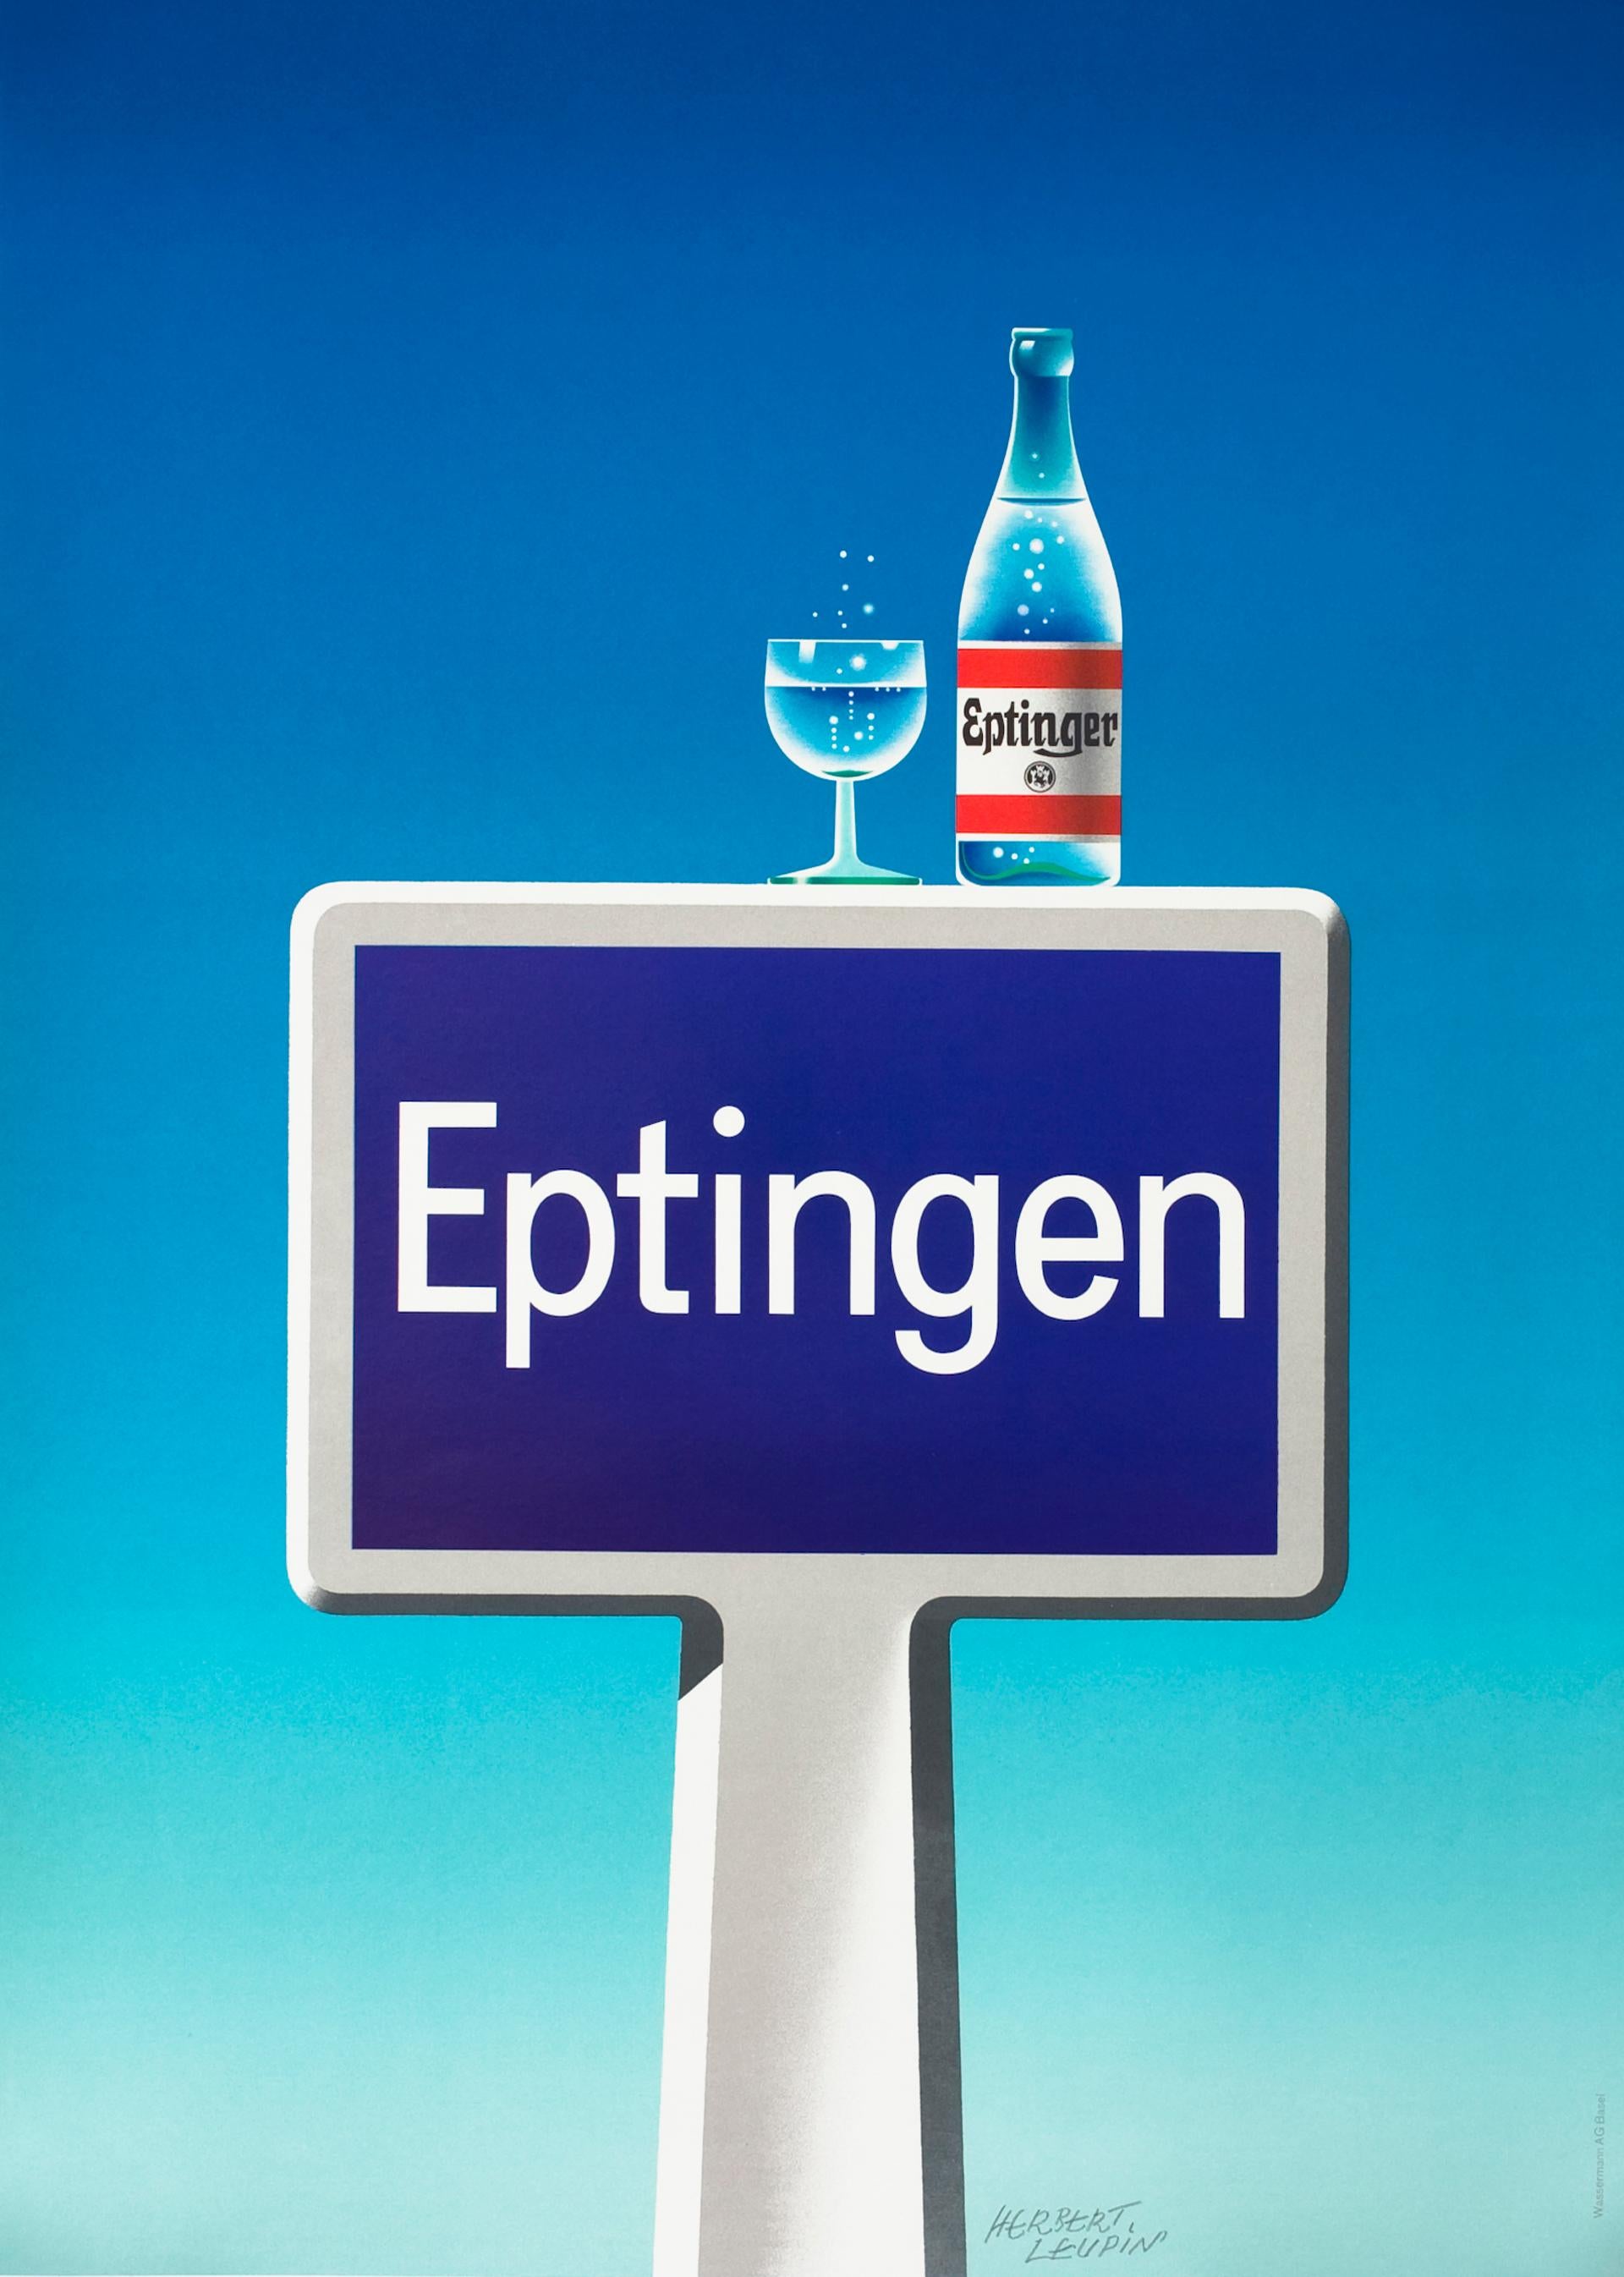 "Eptingen" Original Vintage Beverage Poster - Print by Herbert Leupin